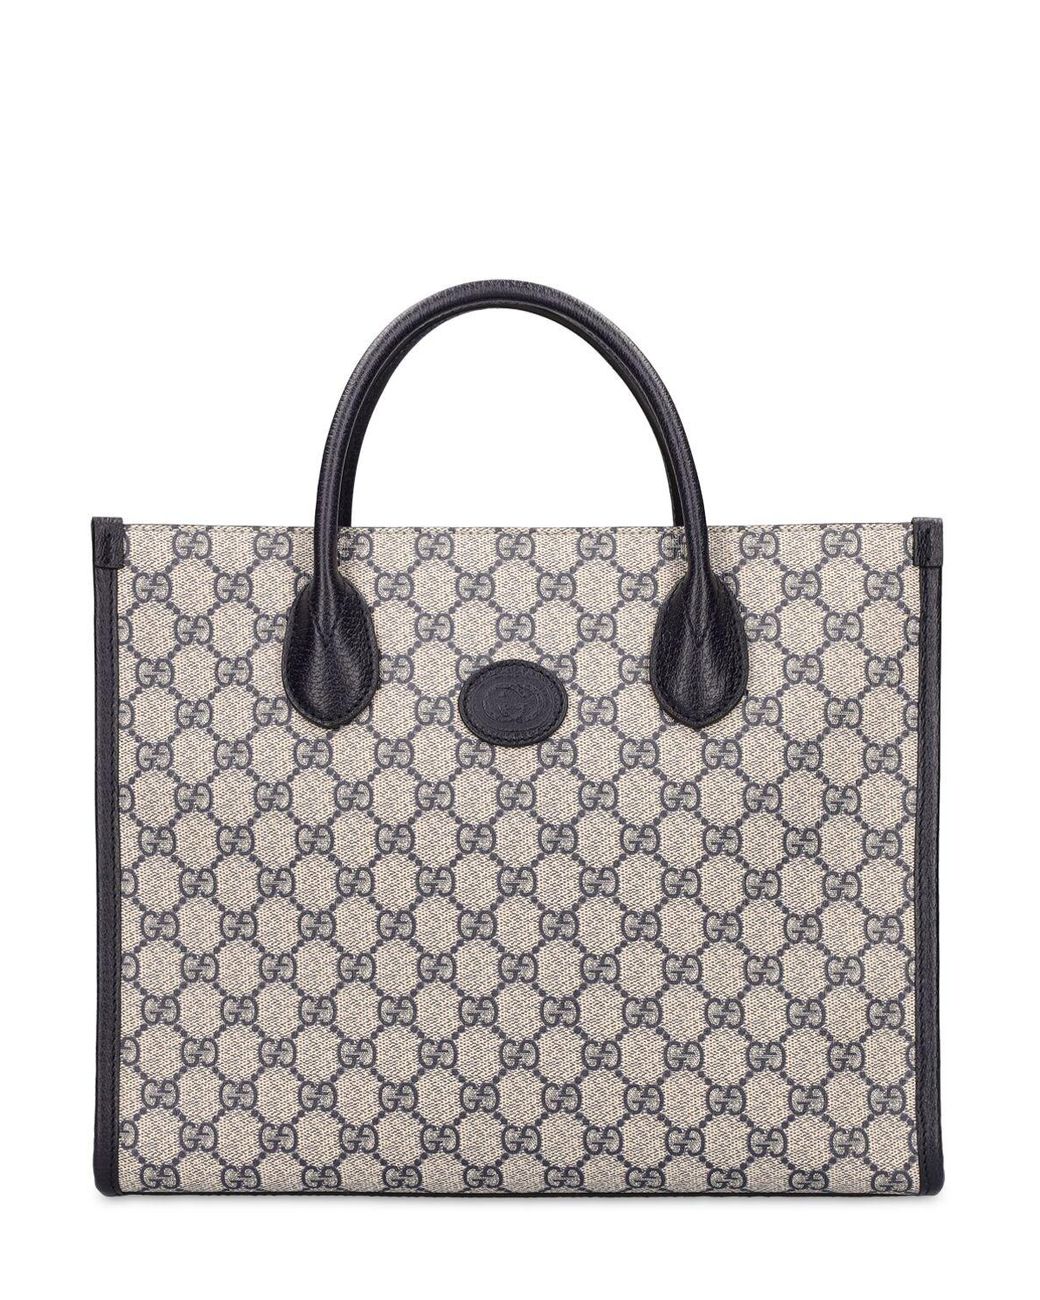 Gucci GG Supreme White Leather Beige Large Tote Bag